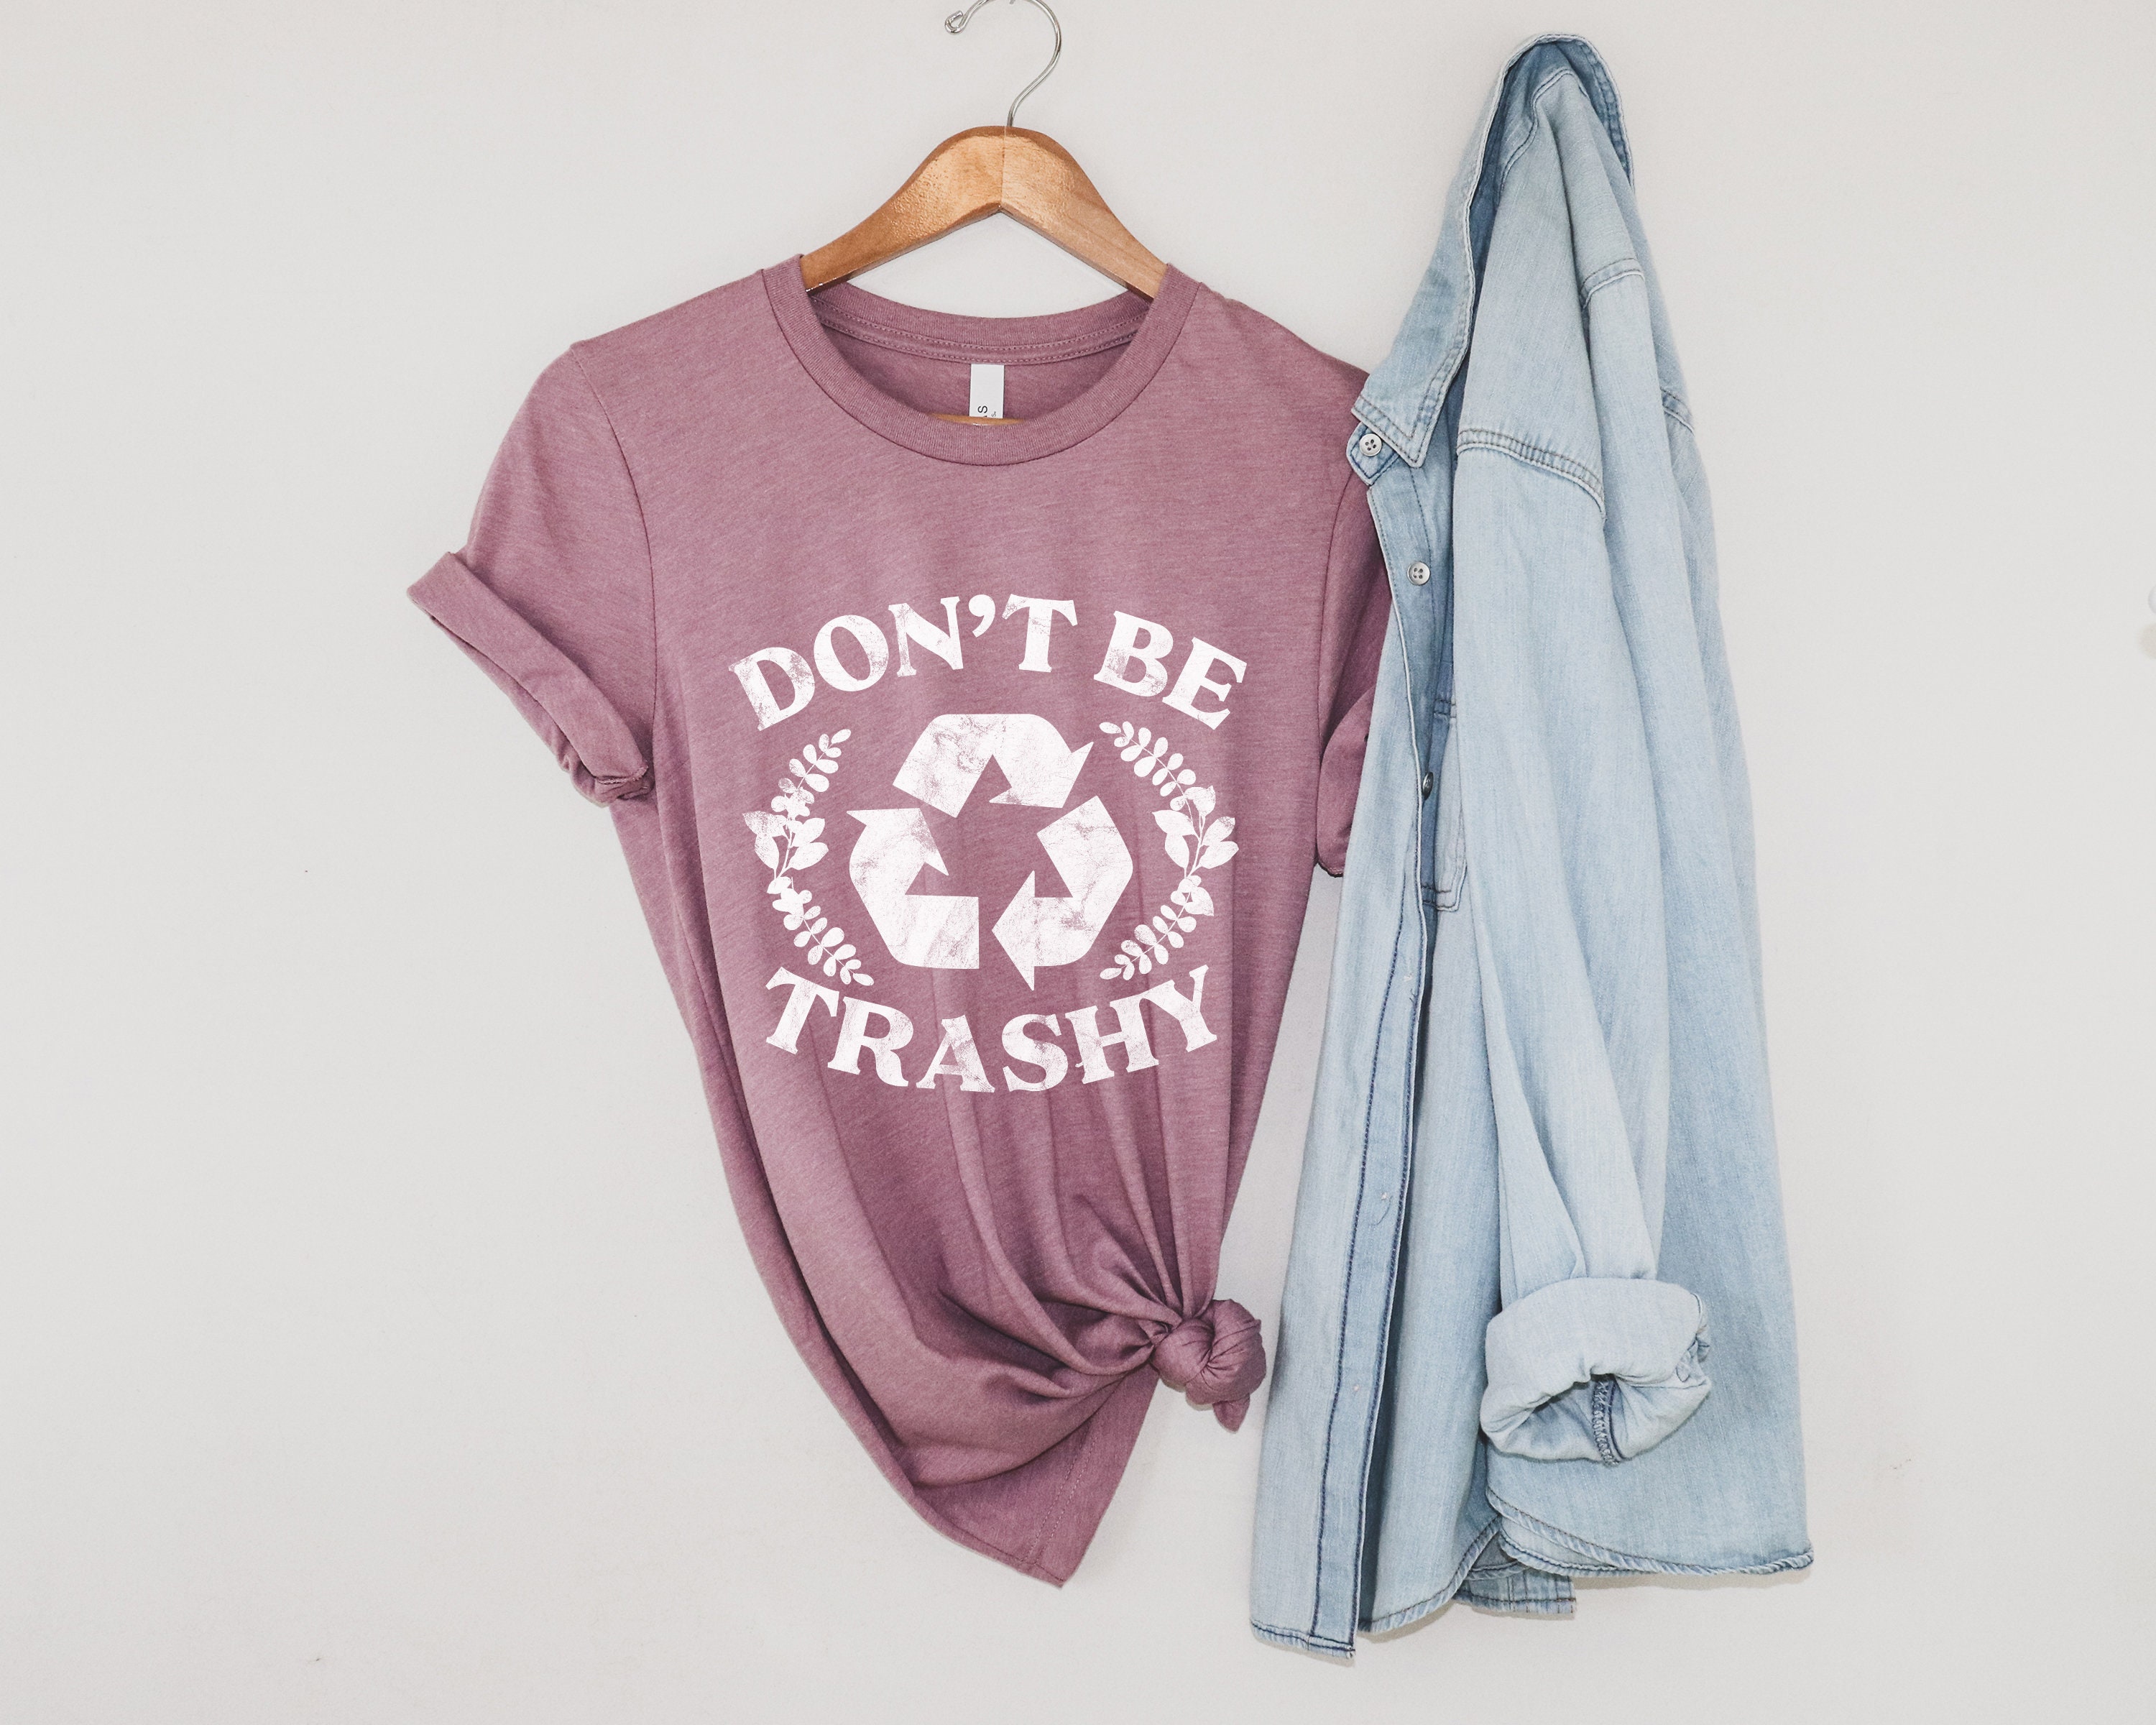 Don't Be Trashy Shirt Environment Shirt Recycle Reduce | Etsy